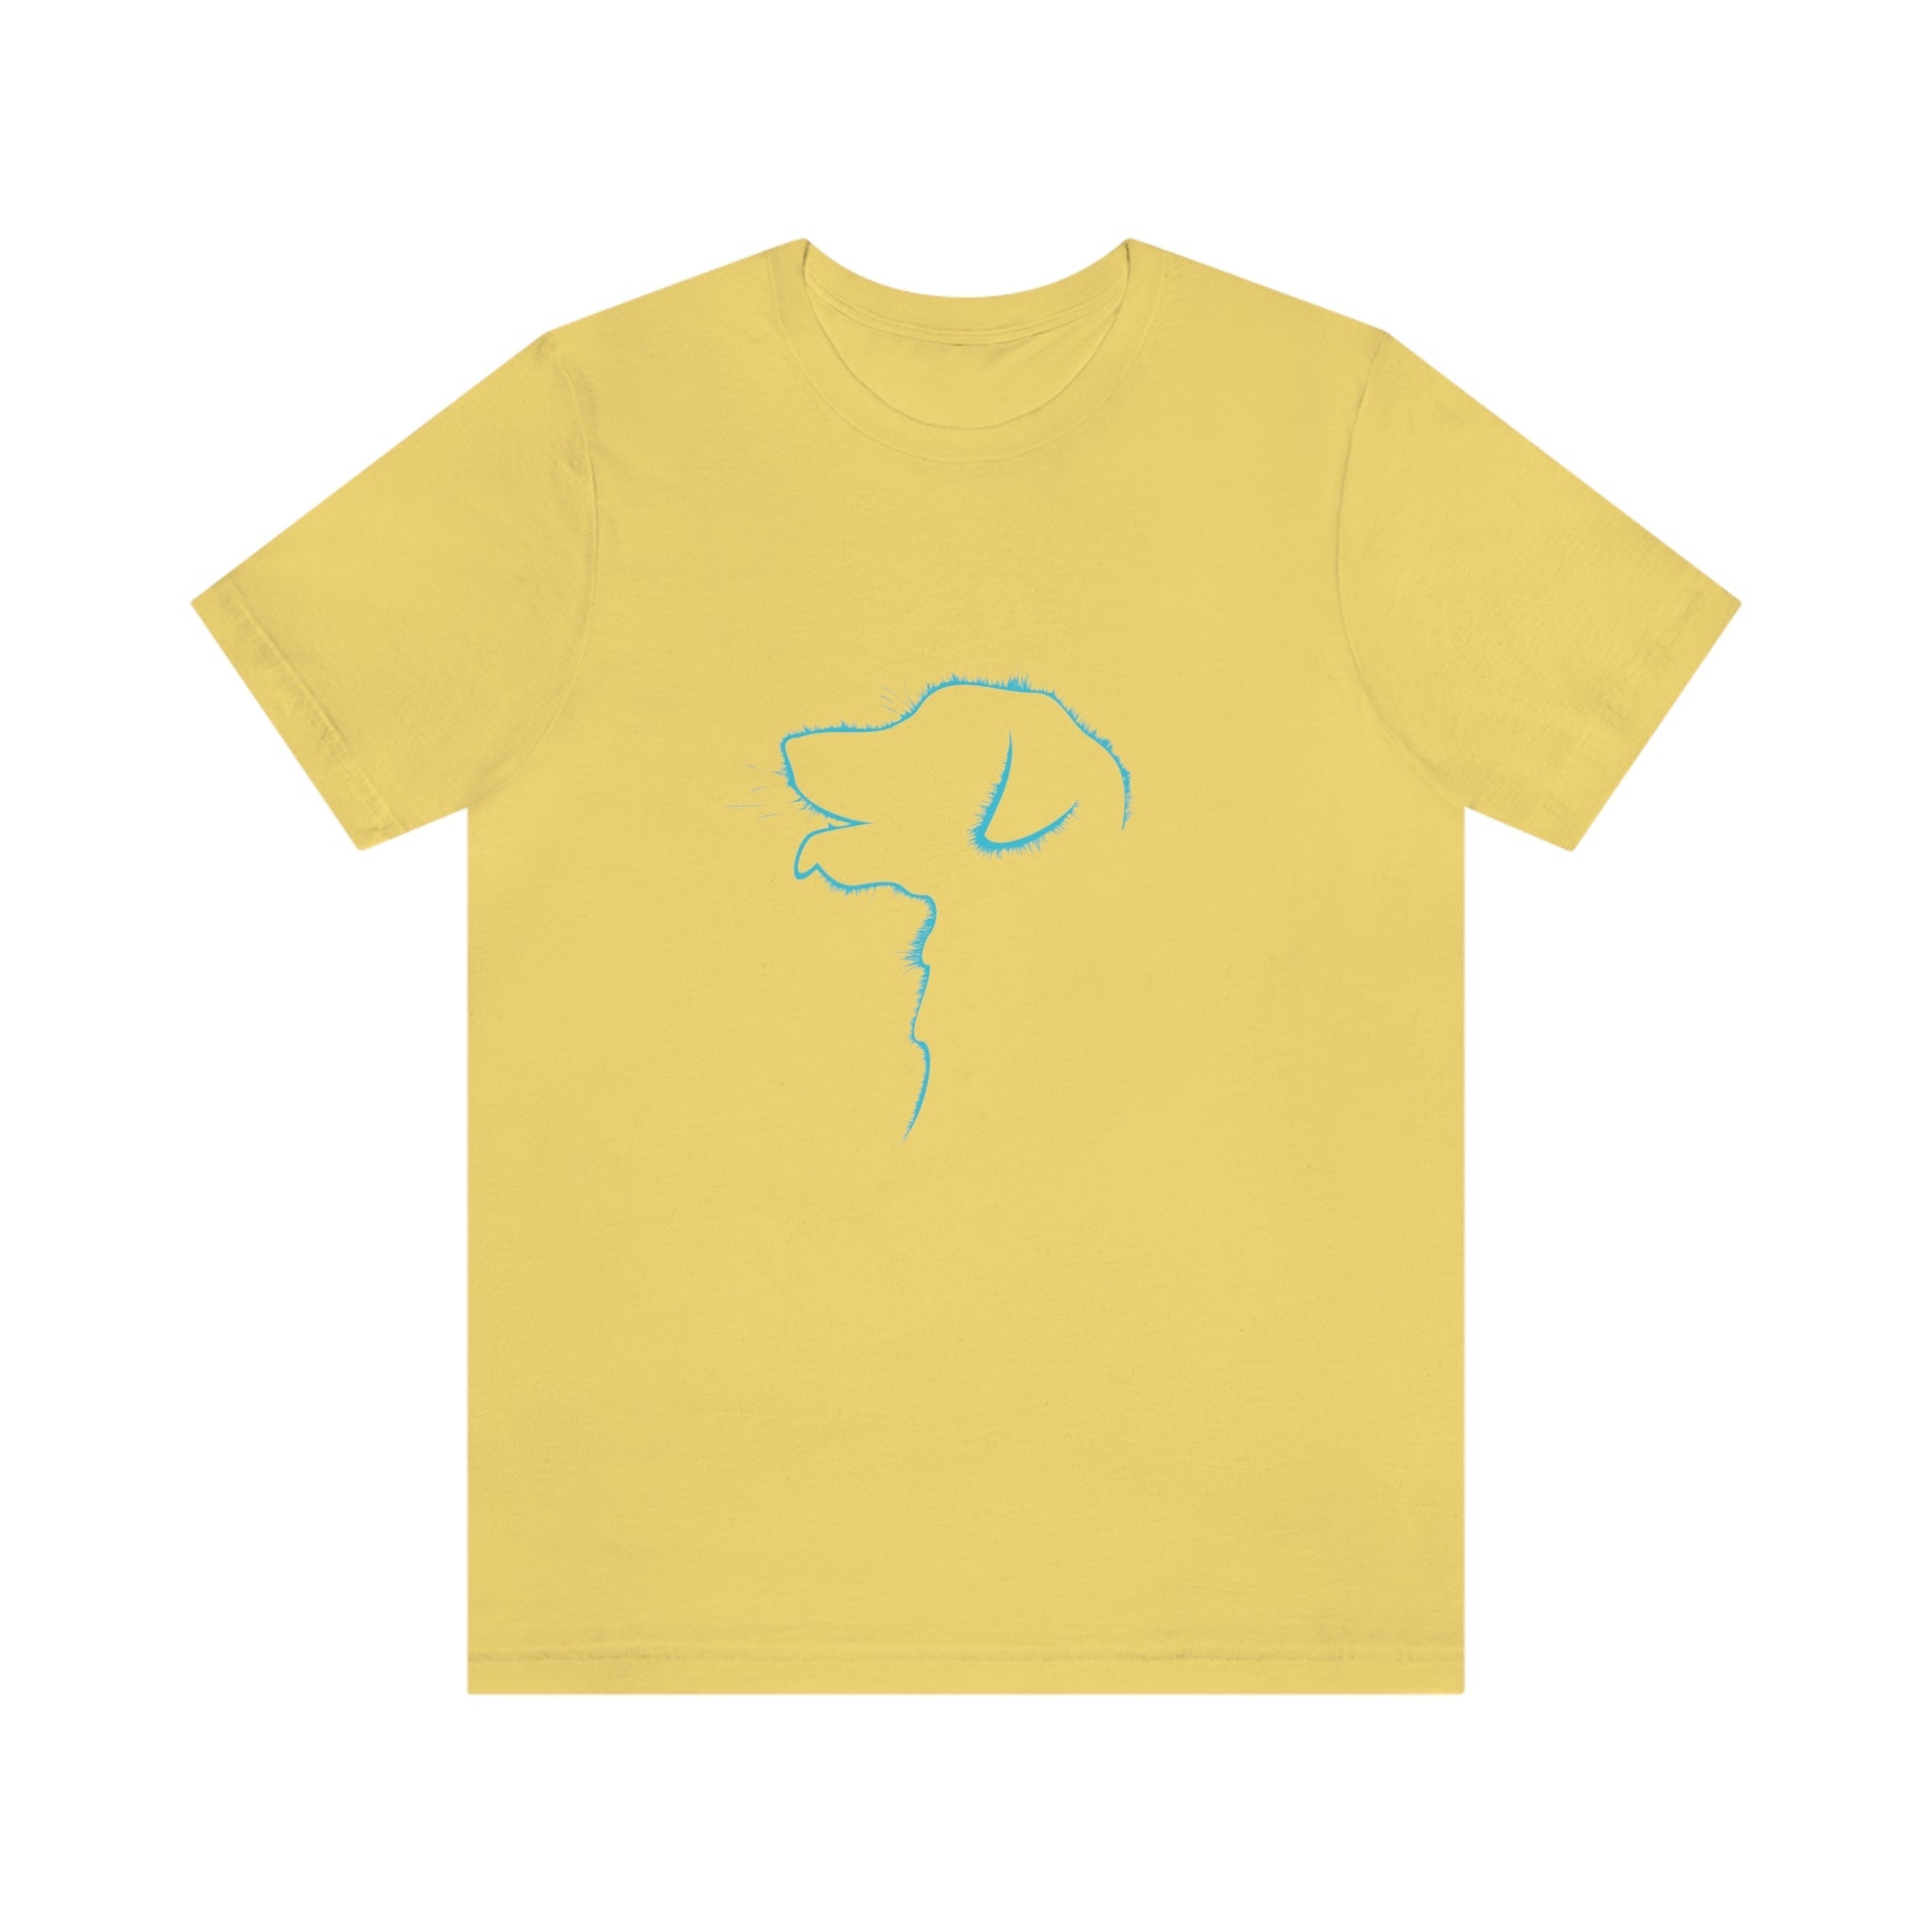 Dog Silhouette - Blue : Unisex 100% Cotton T-Shirt by Bella+Canvas